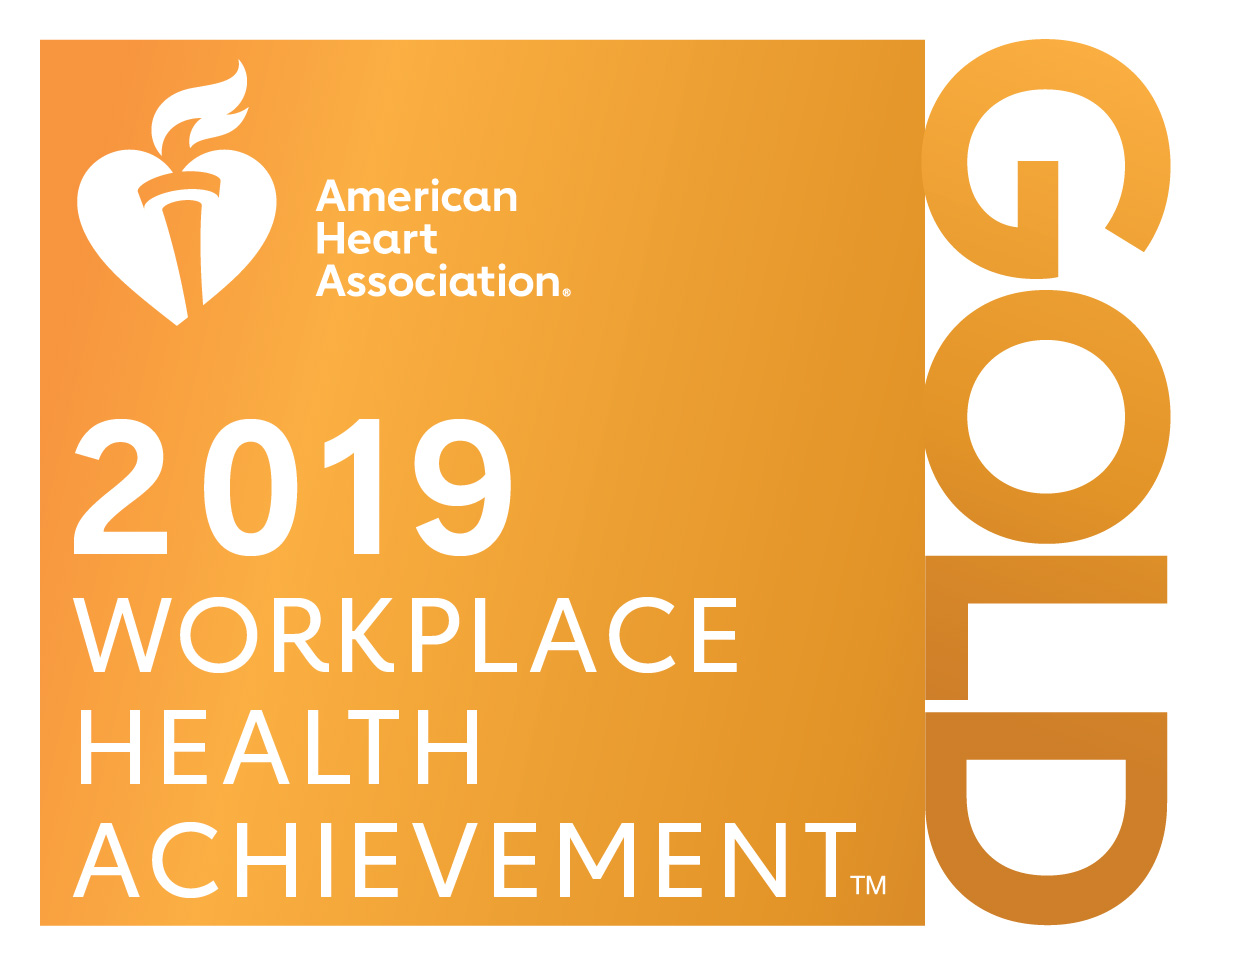 American Heart Association Workplace Health Achievement